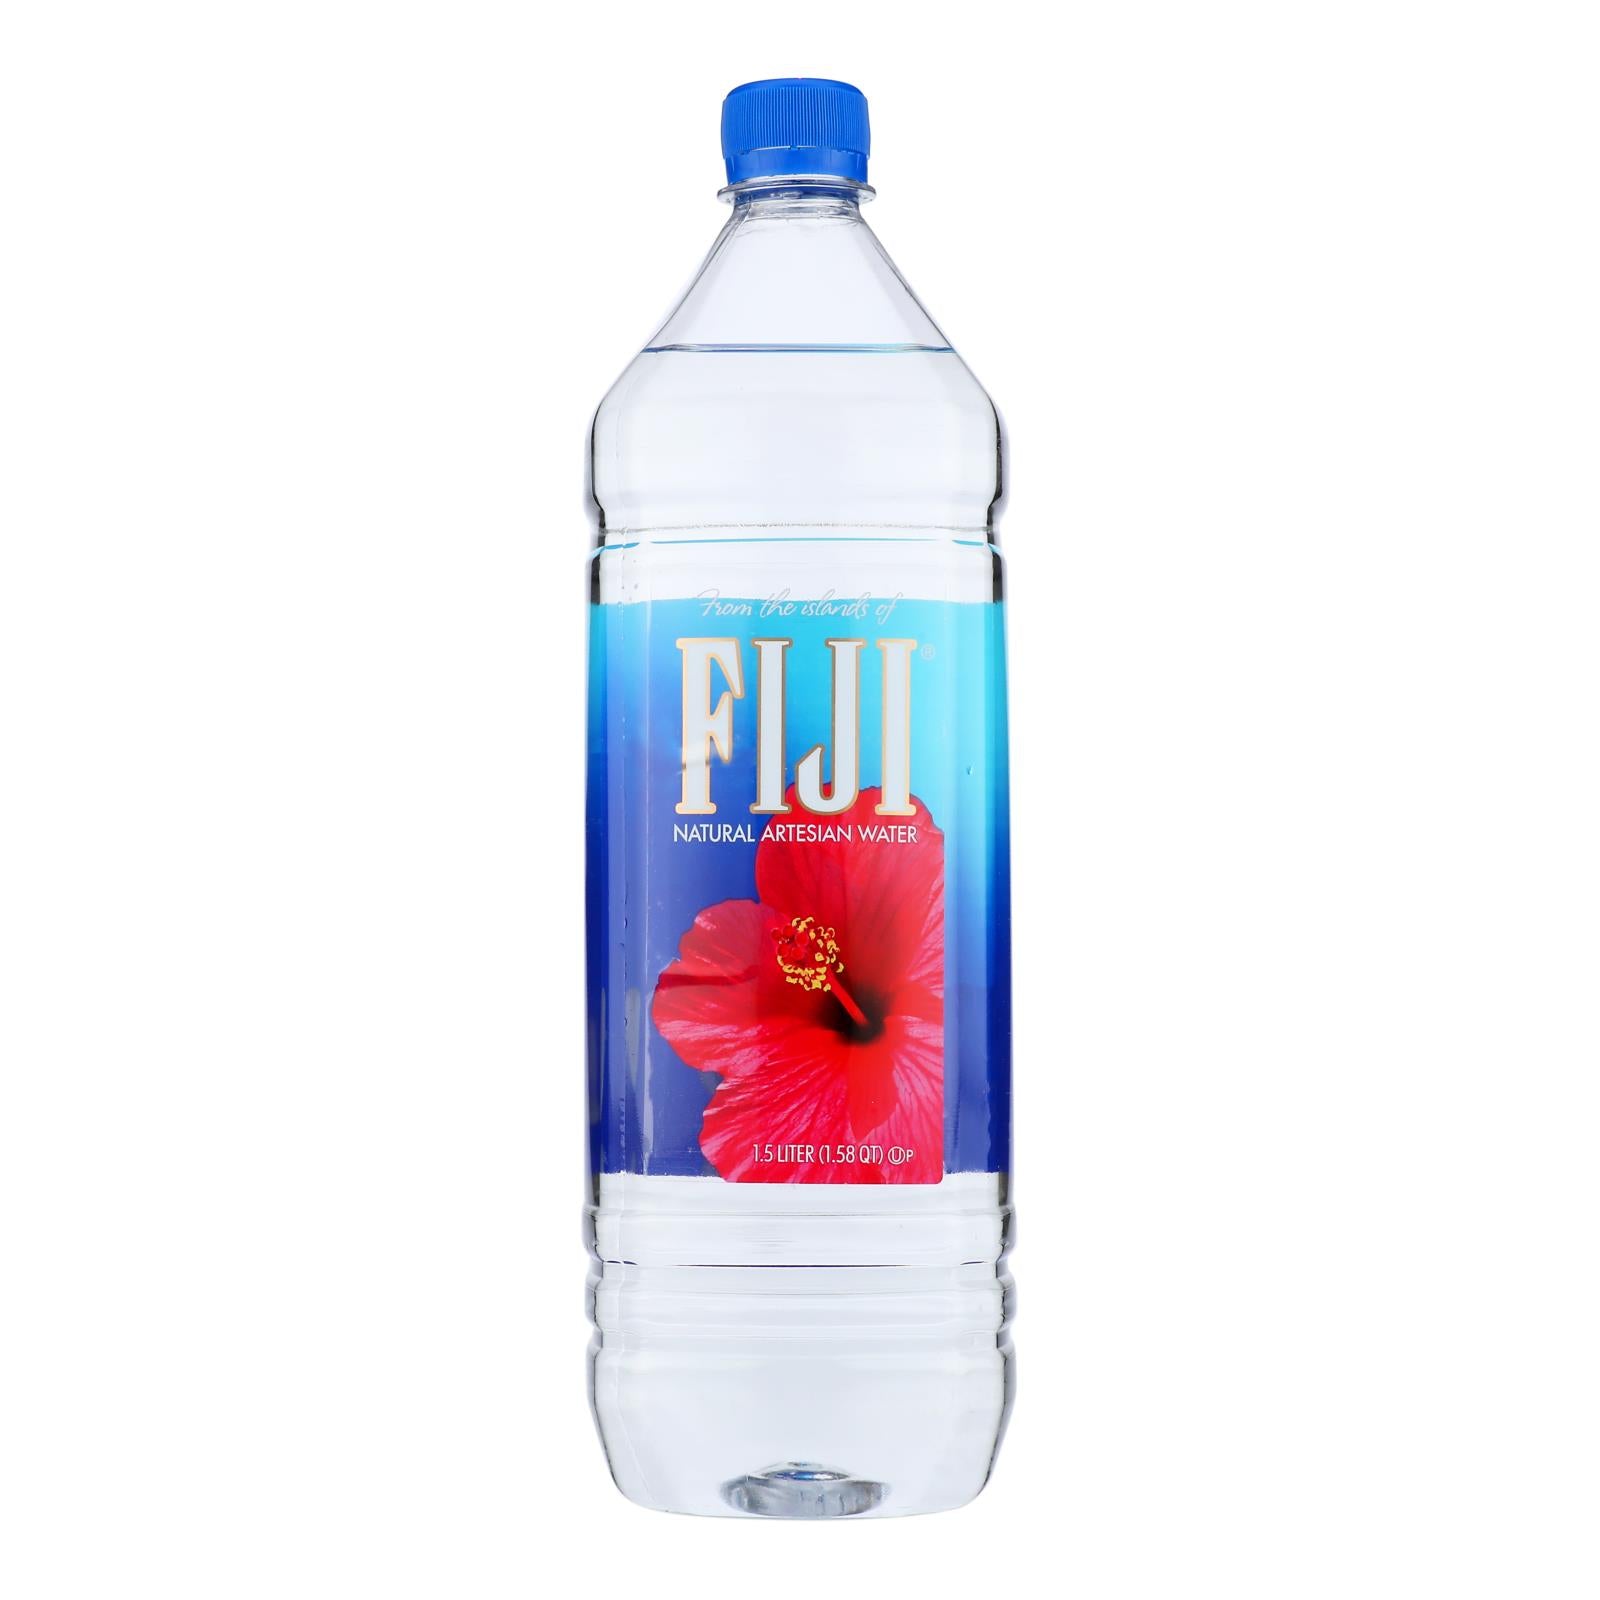 Fiji Natural Artesian Water Artesian Water - Case Of 12 - 50.7 Oz.